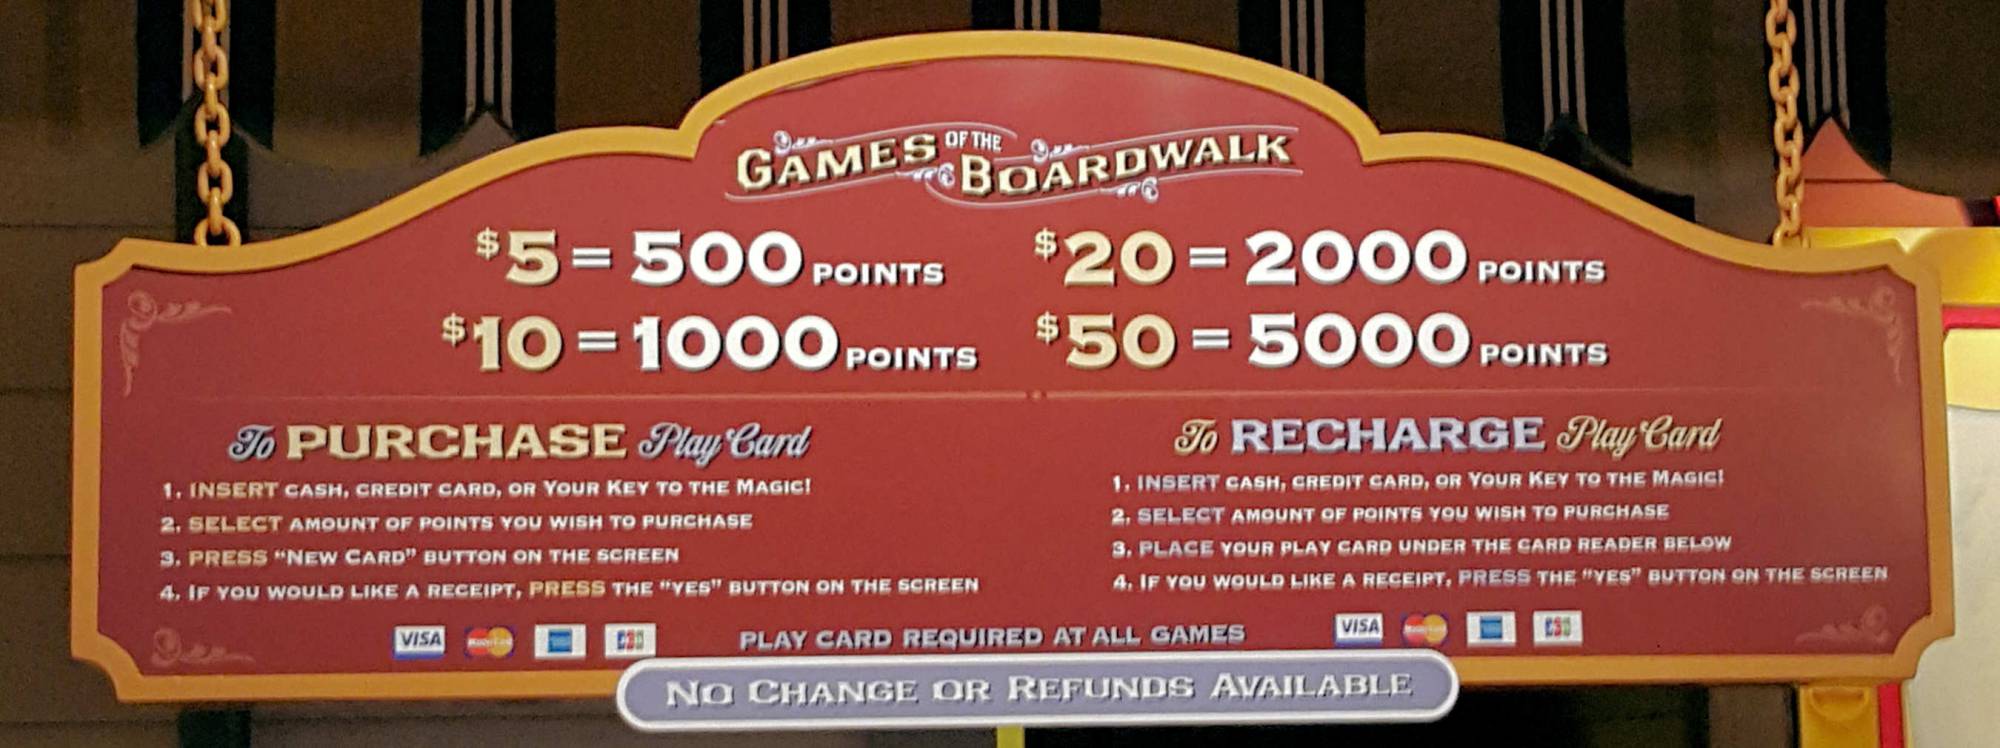 California Adventure Paradise Pier Boardwalk games sign and card machine